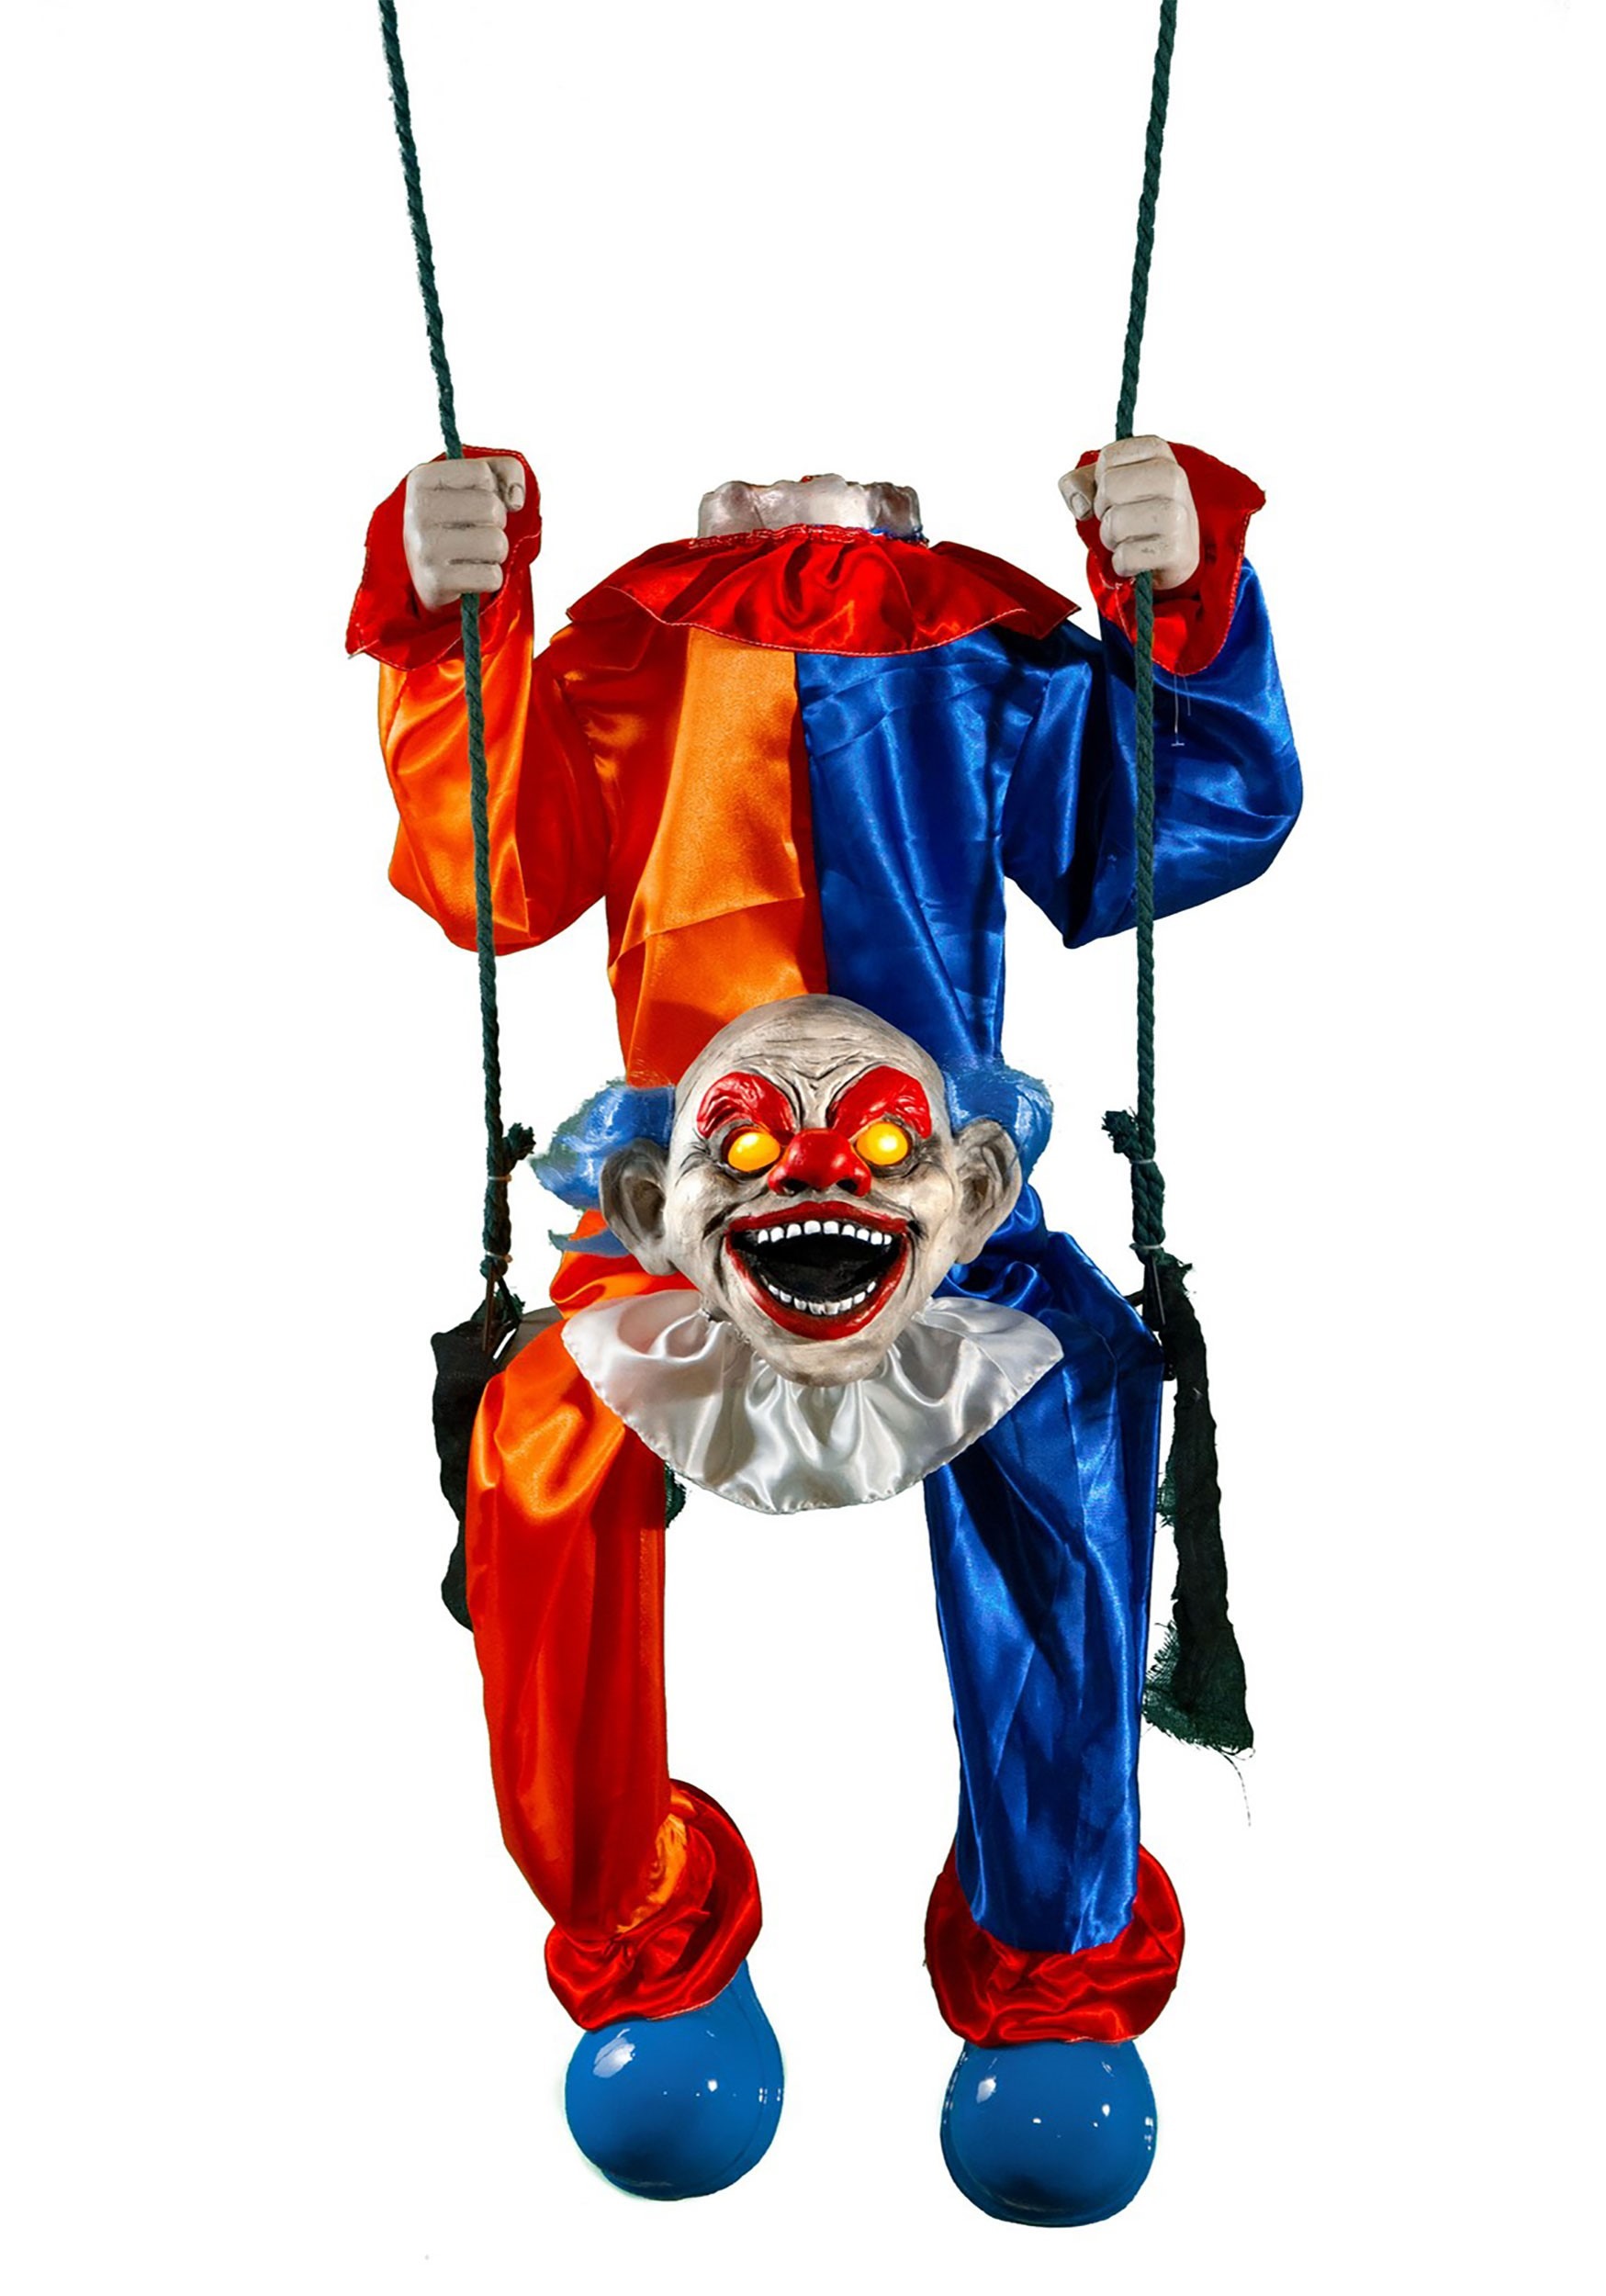 Headless Clown on Swing Animated Halloween Decoration